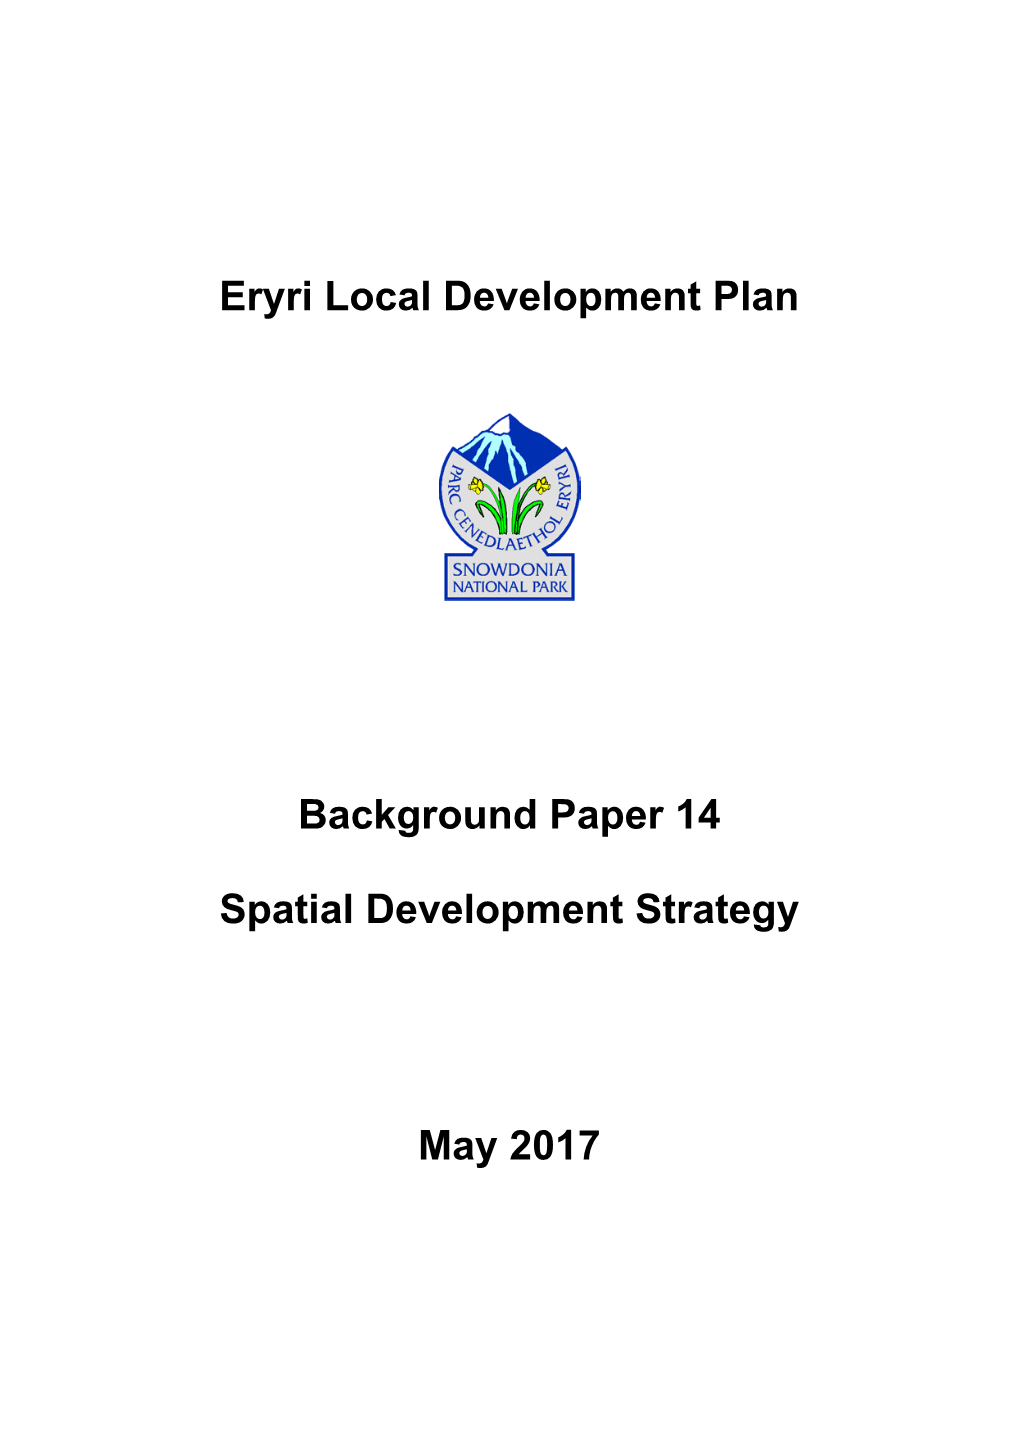 Spatial Development Strategy